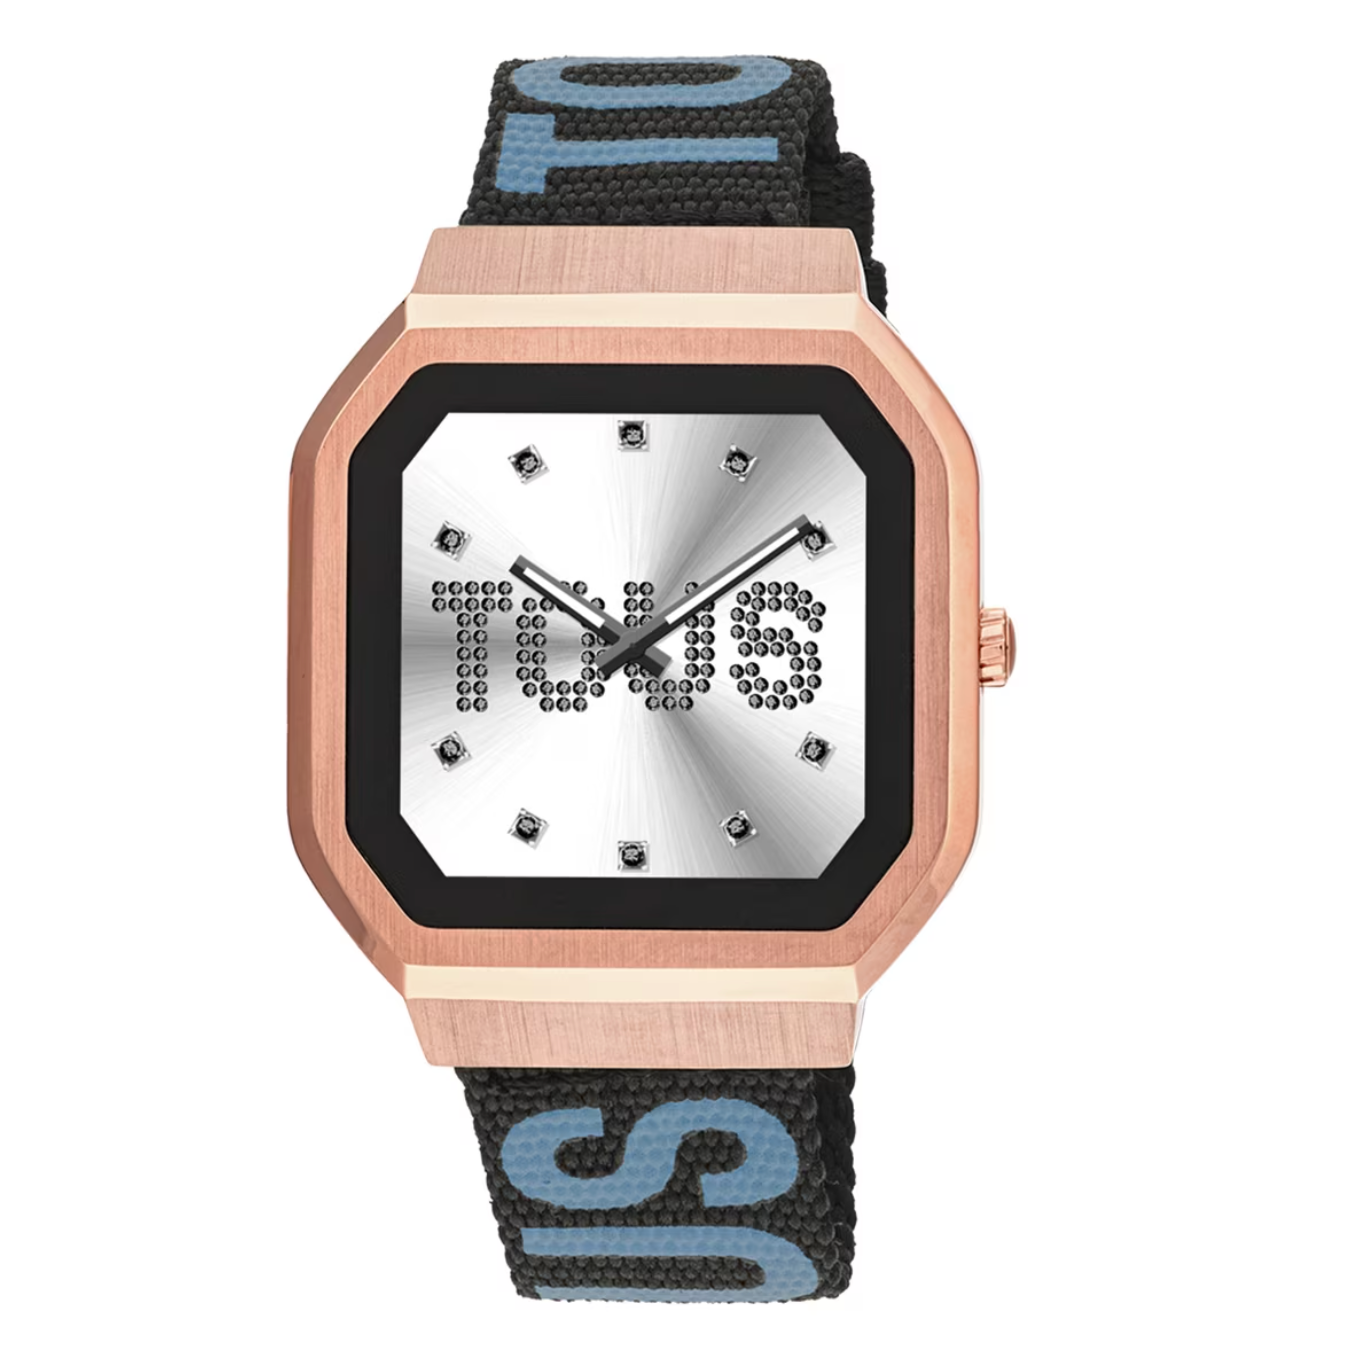 Reloj TOUS smartwatch B-Connect silicona azul